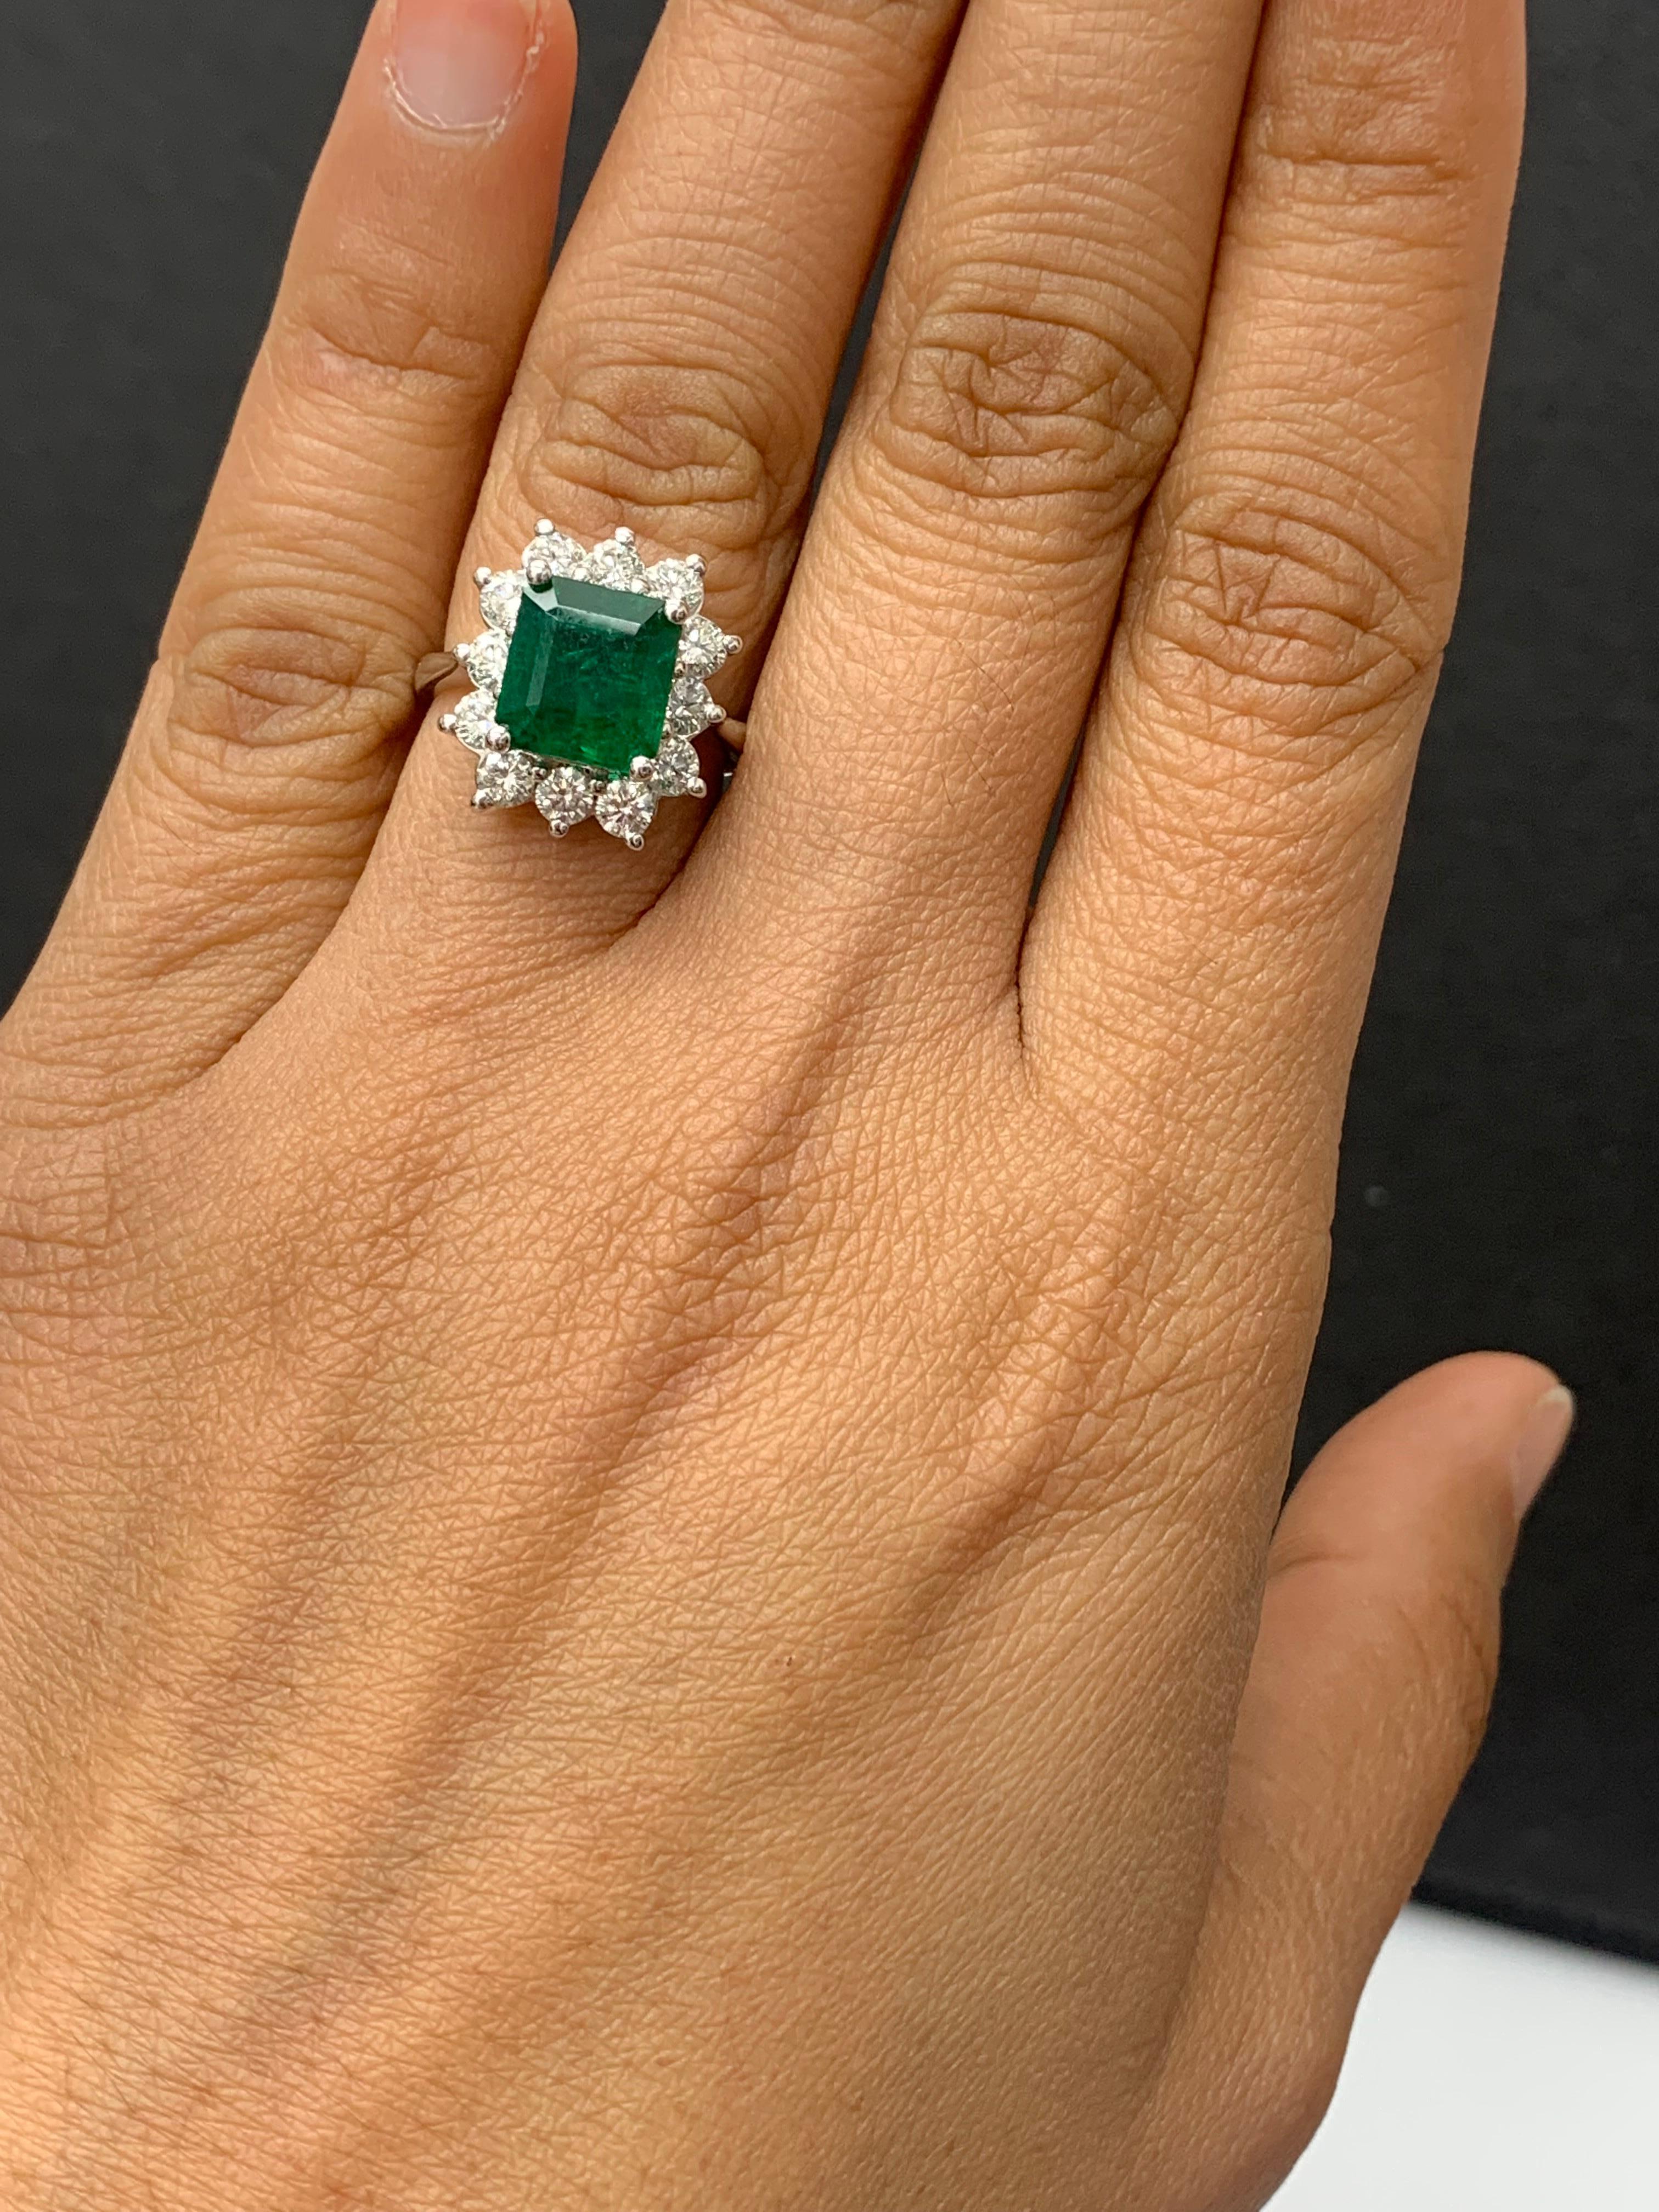 Certified 3.17 Carat Emerald Cut Emerald Diamond Ring in 14K White Gold For Sale 4